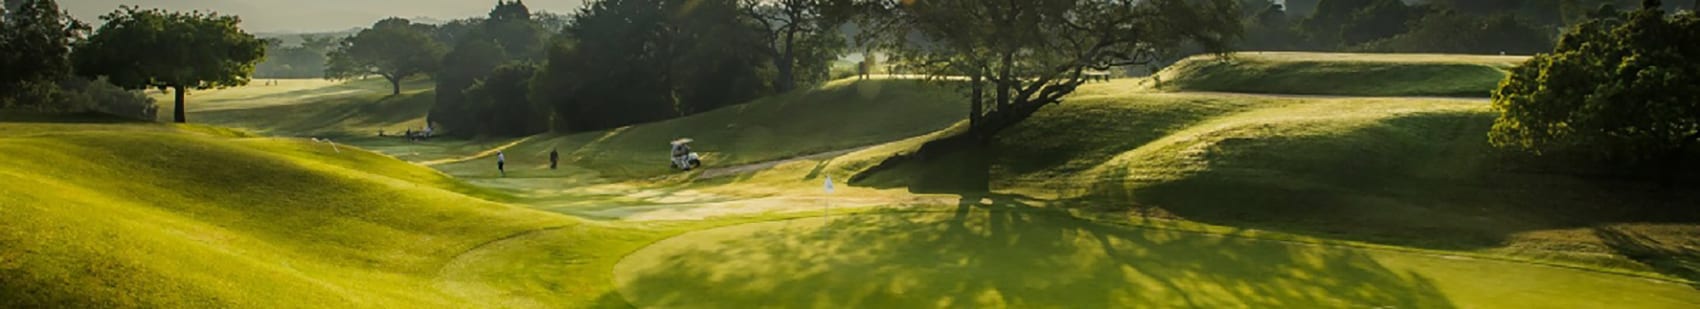 Mbombela Golf Club